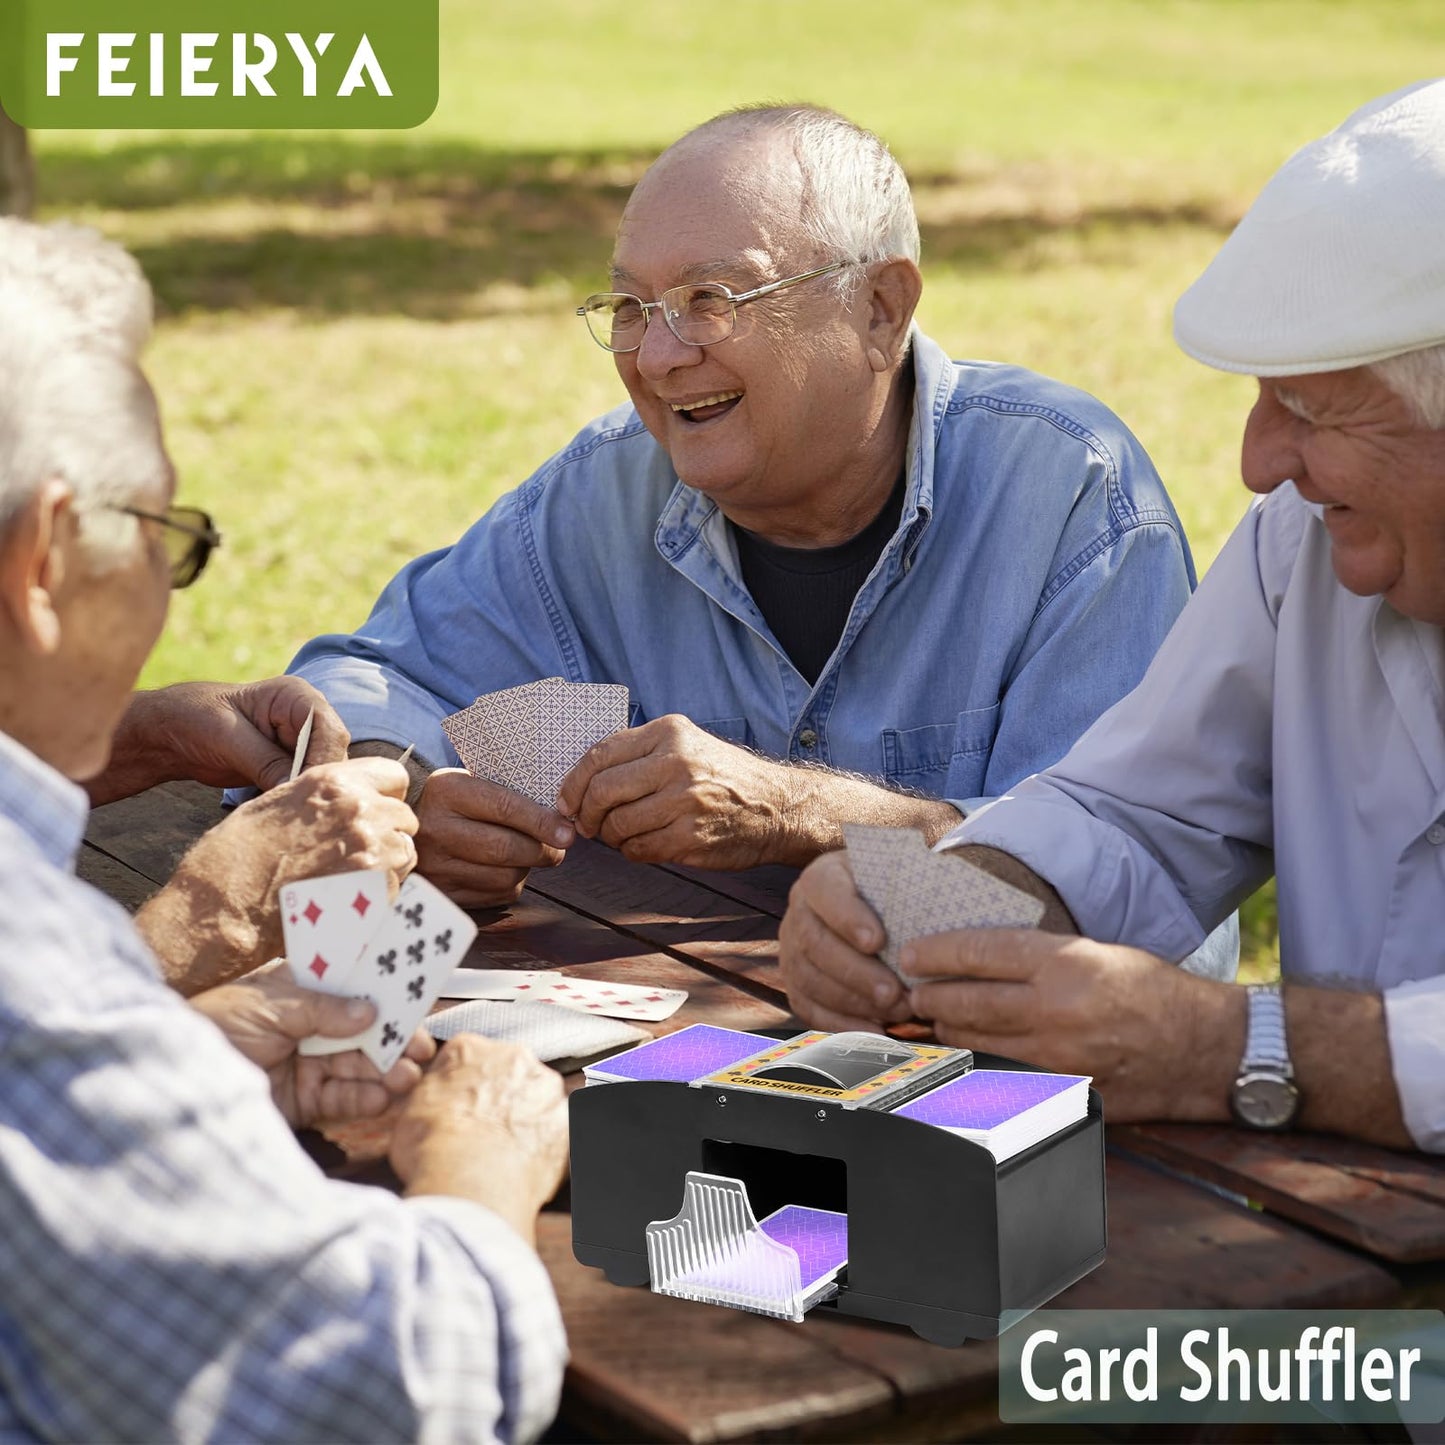 FEIERYA Automatic Card Shuffler 2 Deck,Battery-Operated Electric UNO Poker Shuffler,Playing Card Shuffler for Home Card Game,Travel